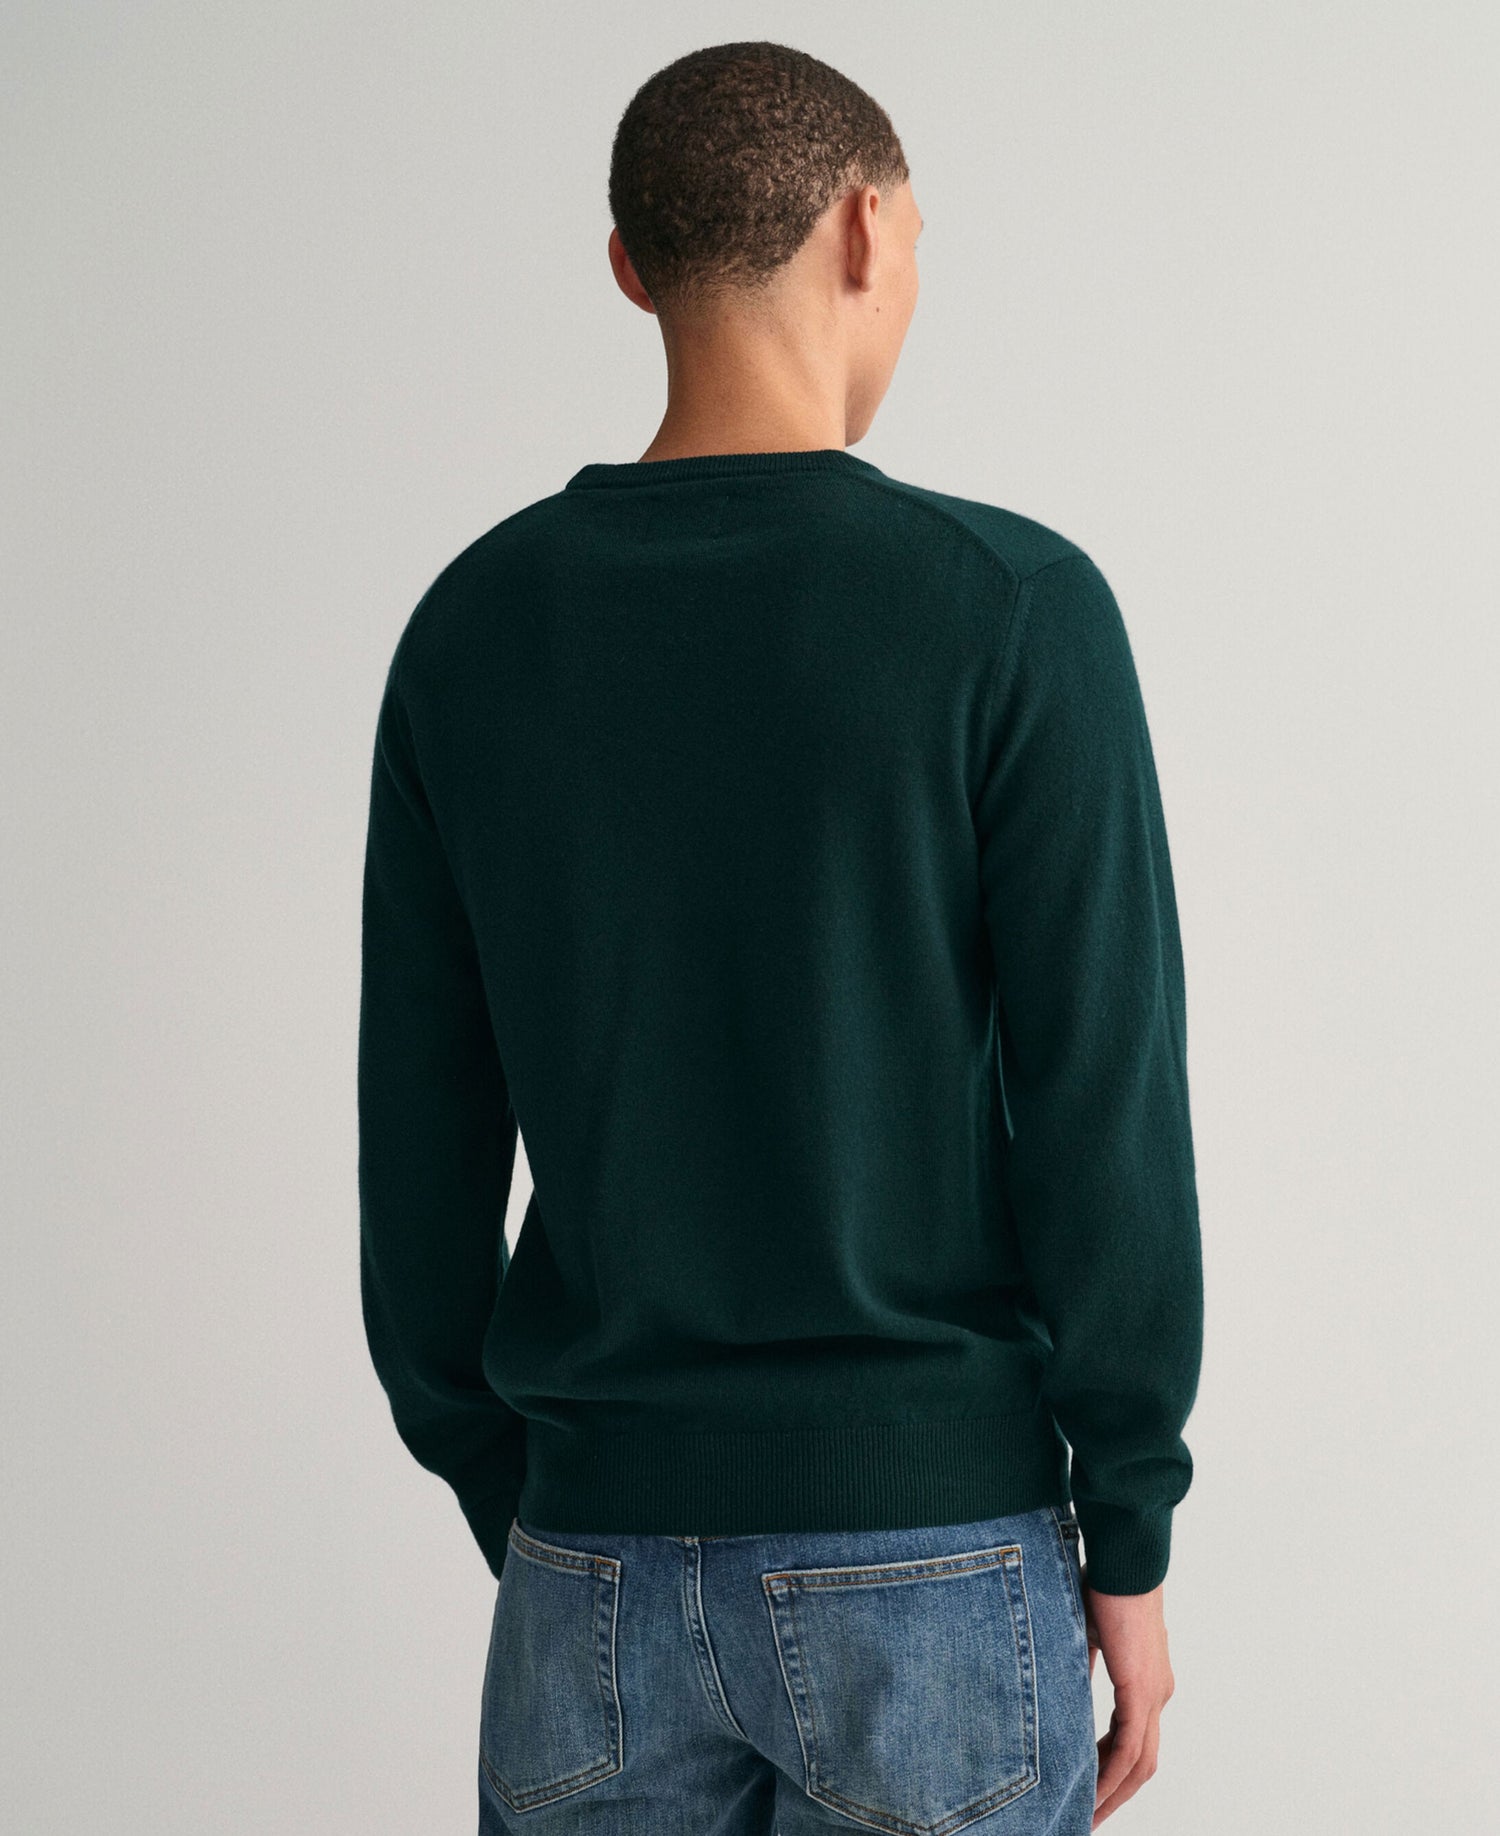 Superfine Lambswool Sweater - Tartan Green